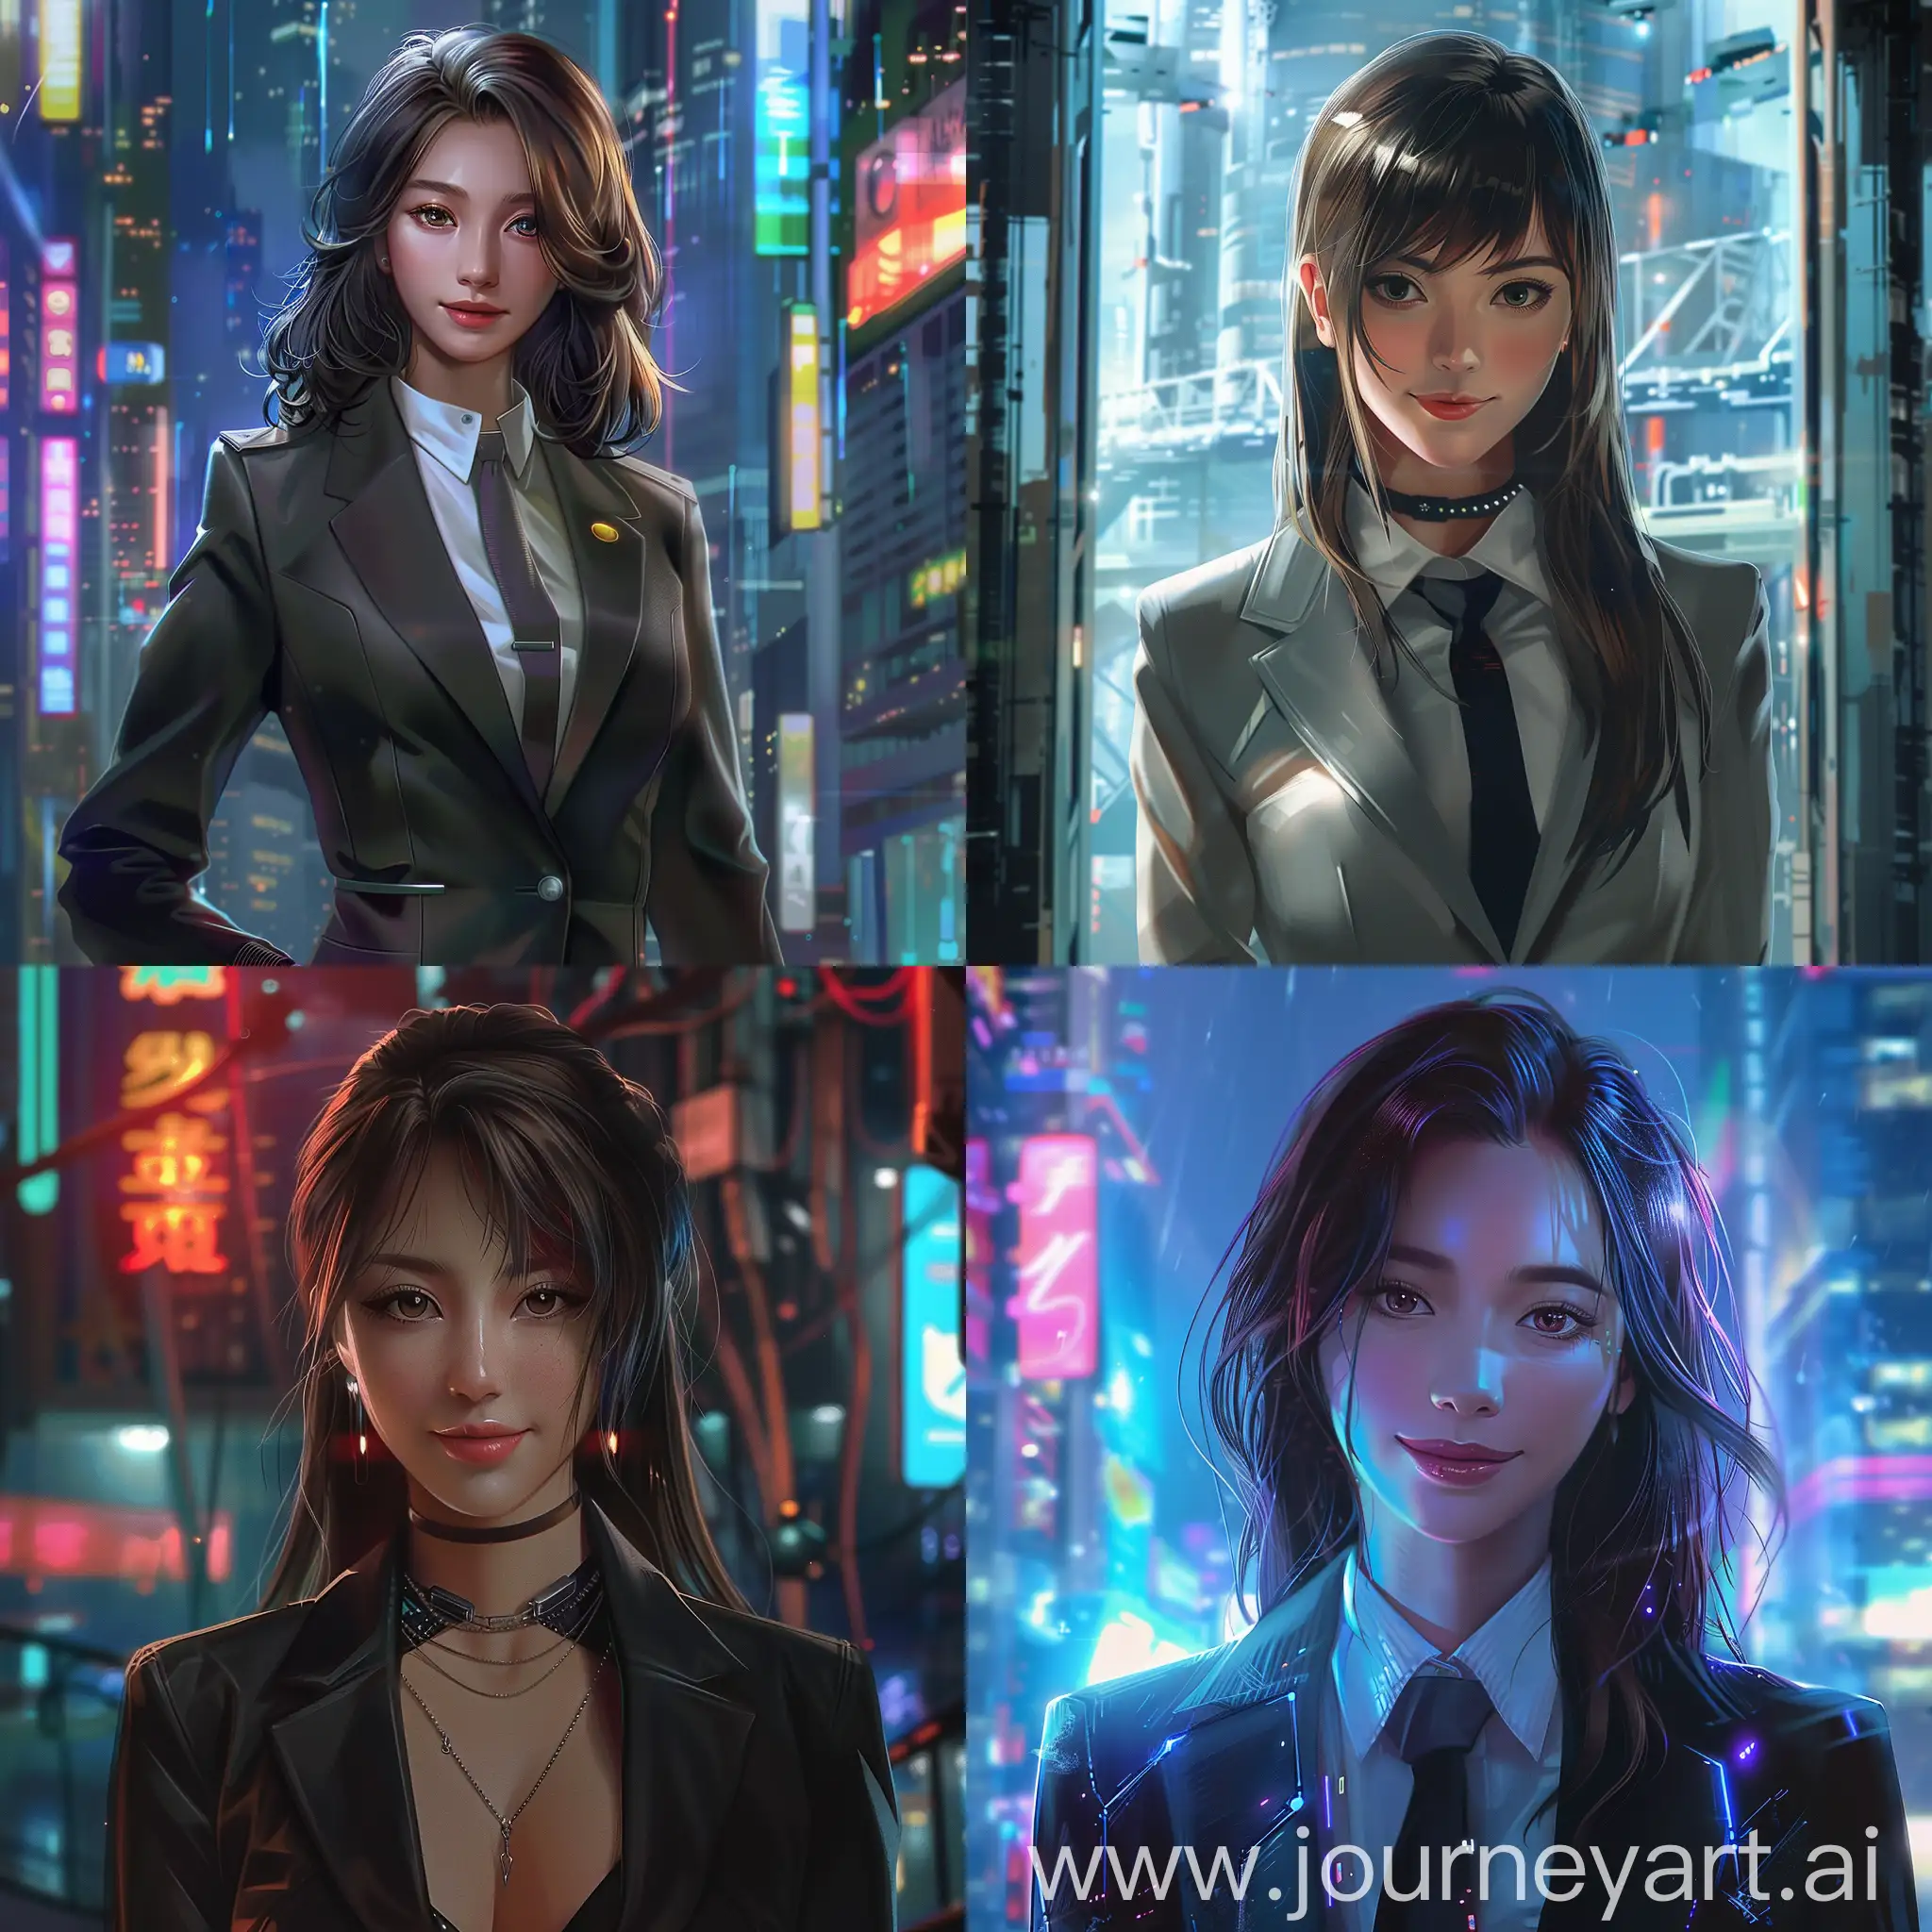 Anime-Cyberpunk-Corporate-Girl-Smiling-in-Futuristic-Setting